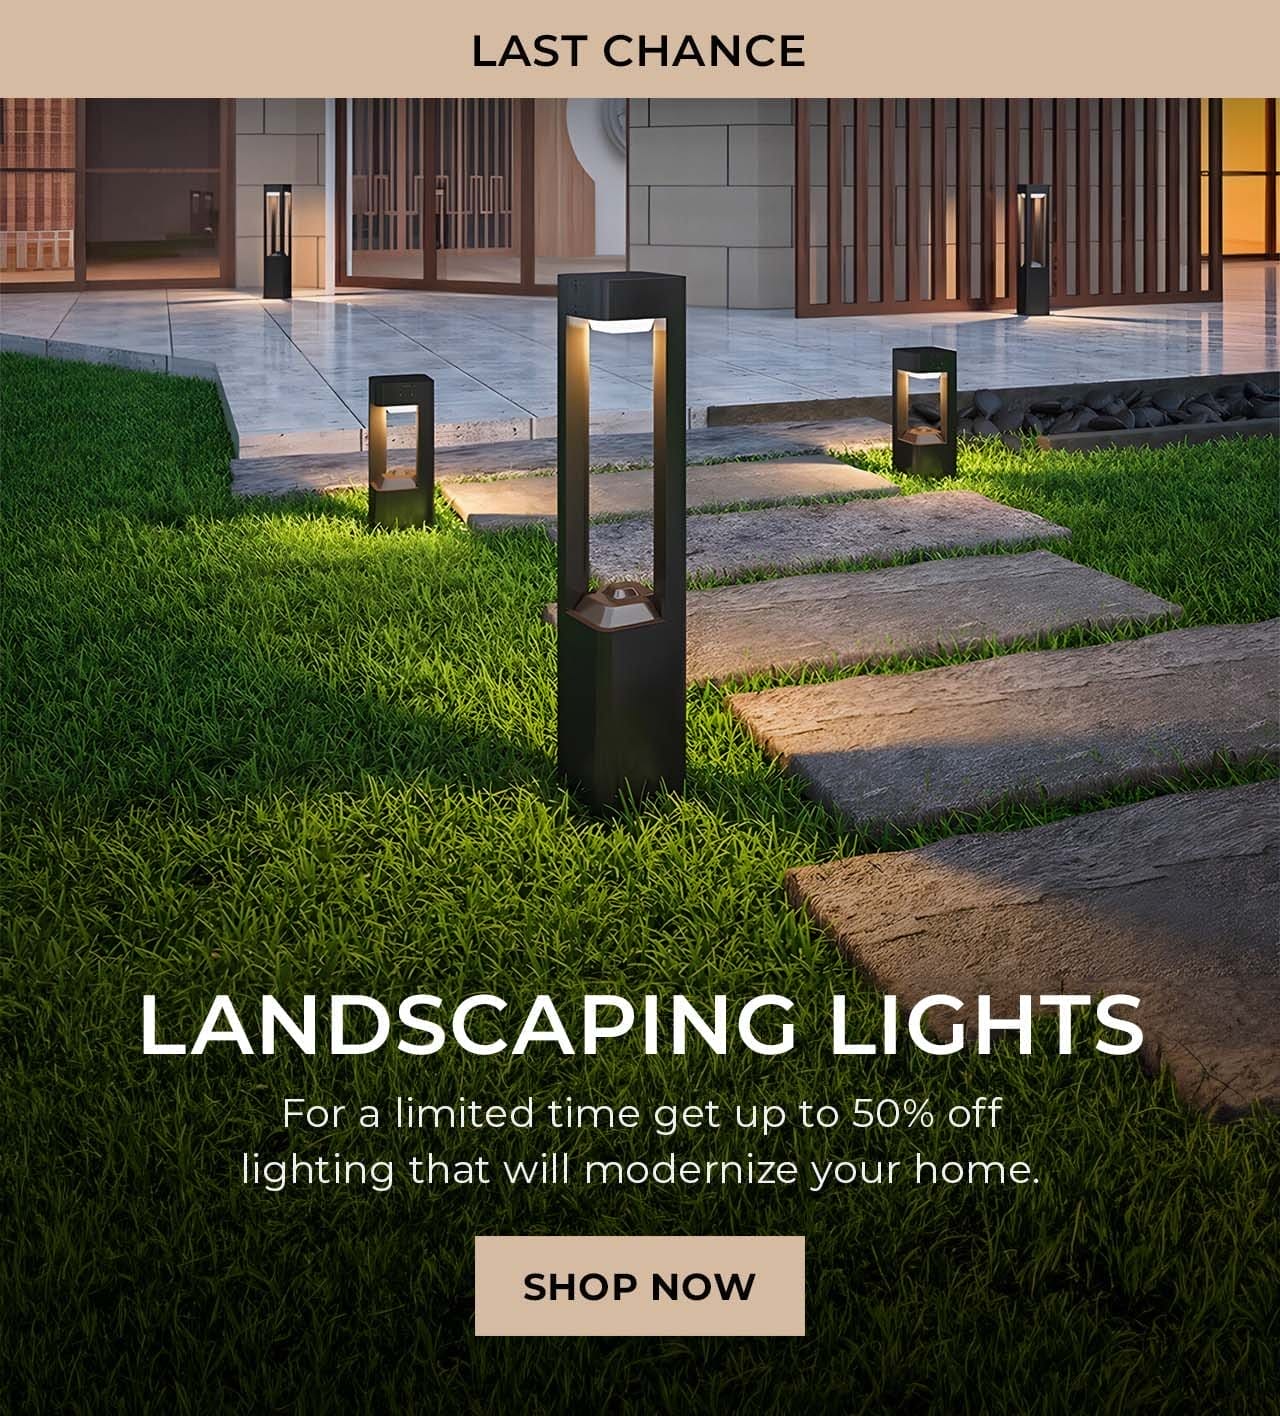 Landscaping Lights | SHOP NOW